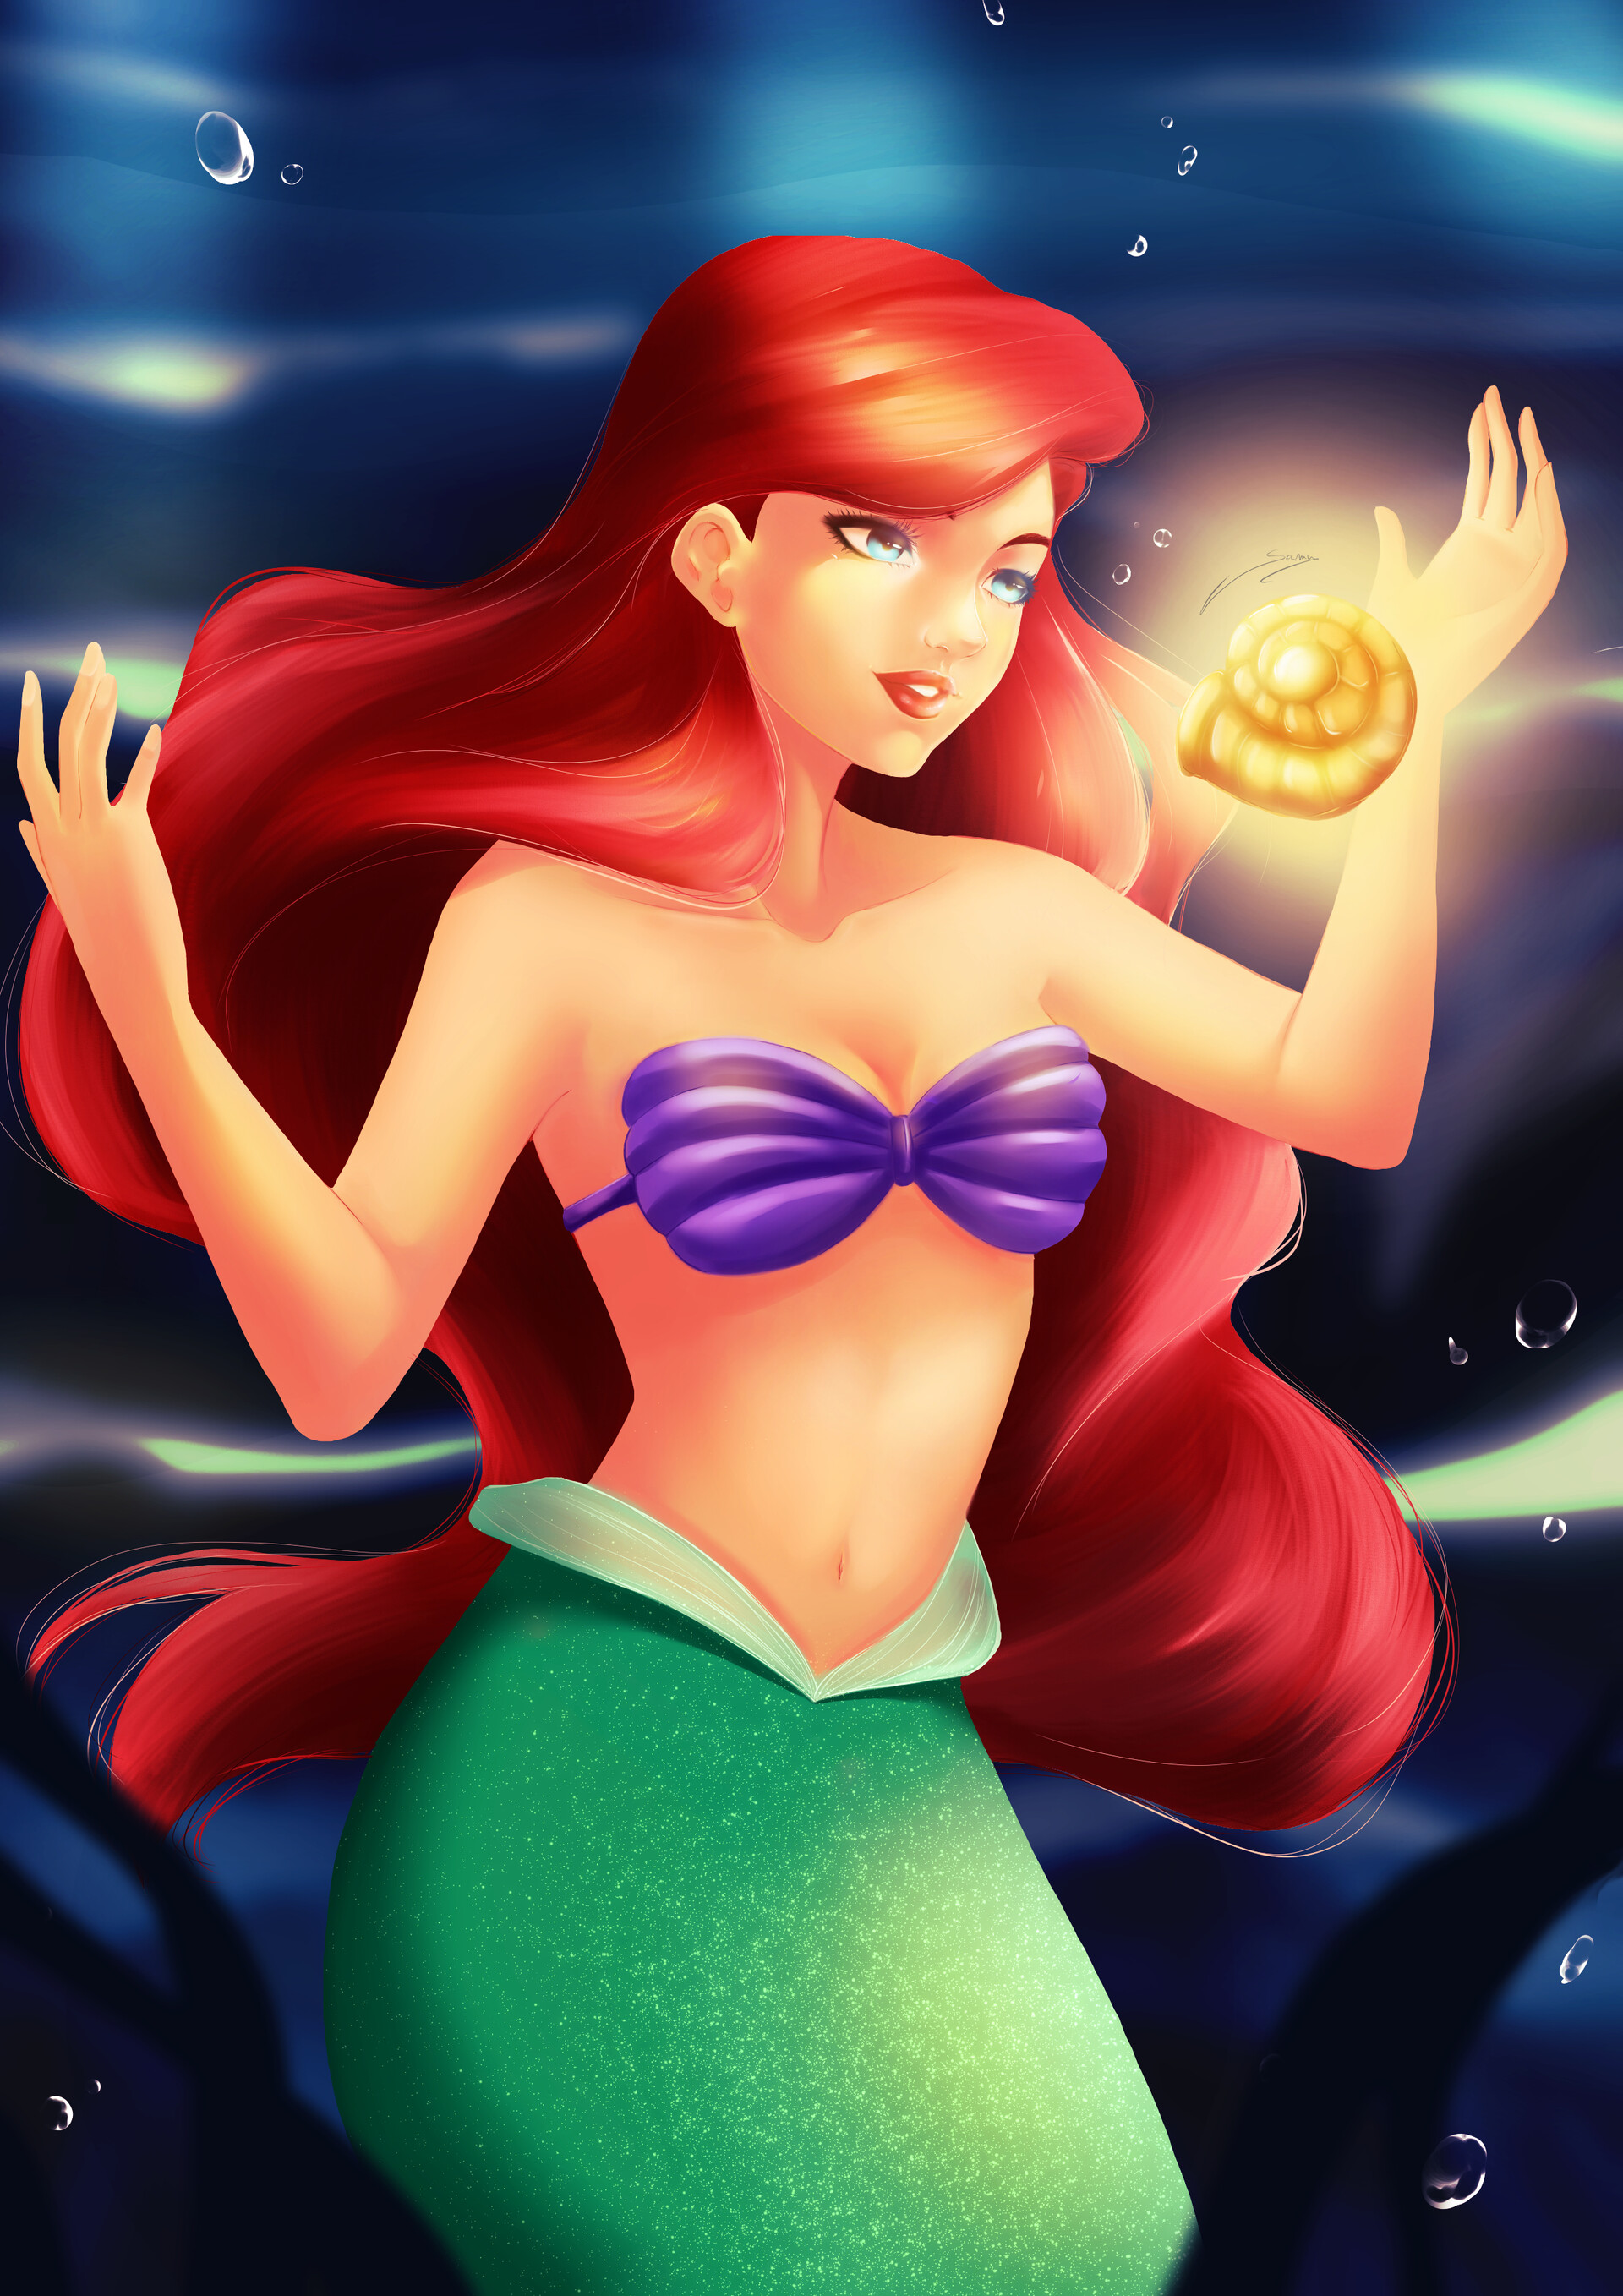 Ariel The Little Mermaid  Anime Style  YouTube